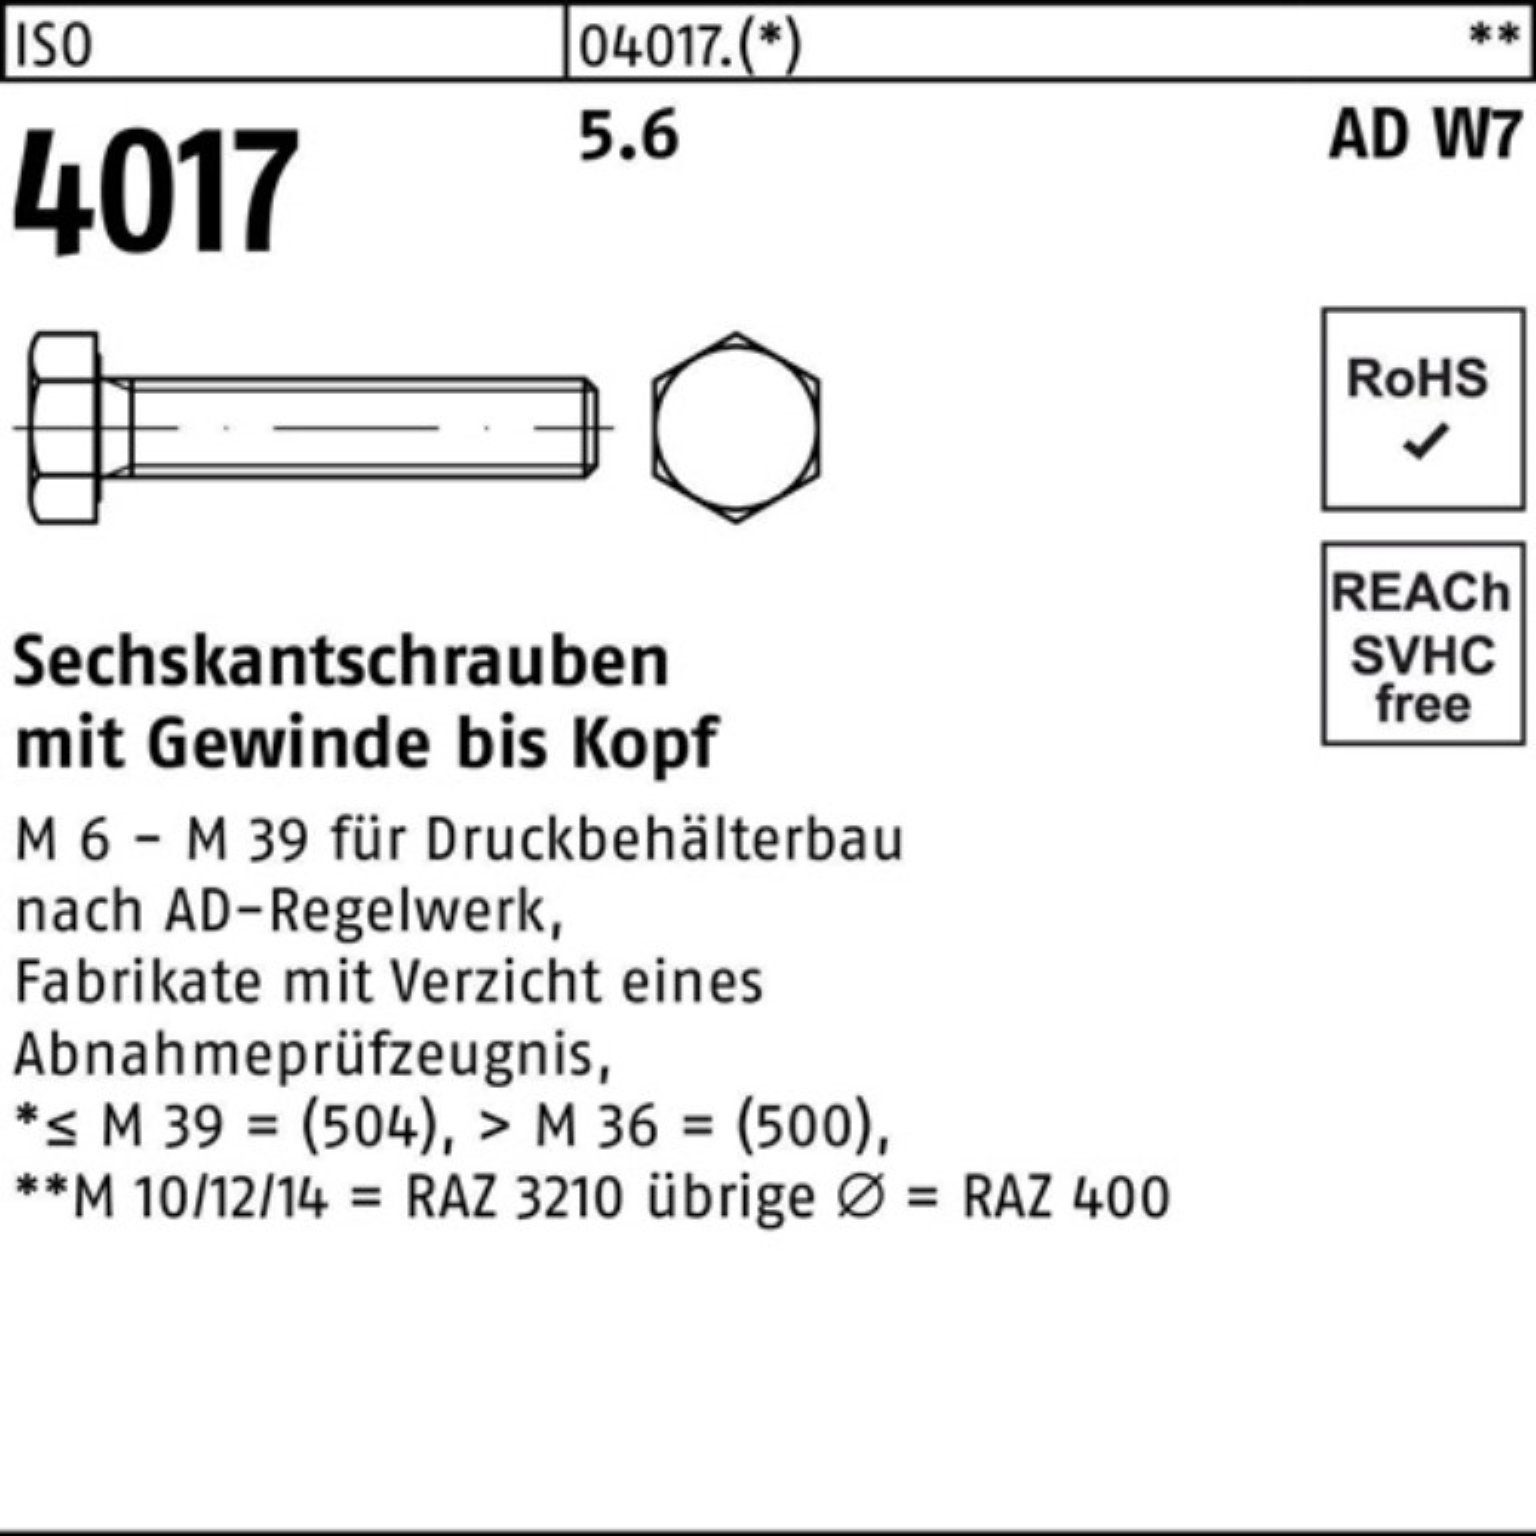 Bufab Sechskantschraube 100er M33x W7 90 VG Pack 1 AD 5.6 Stück 4017 Sechskantschraube ISO IS